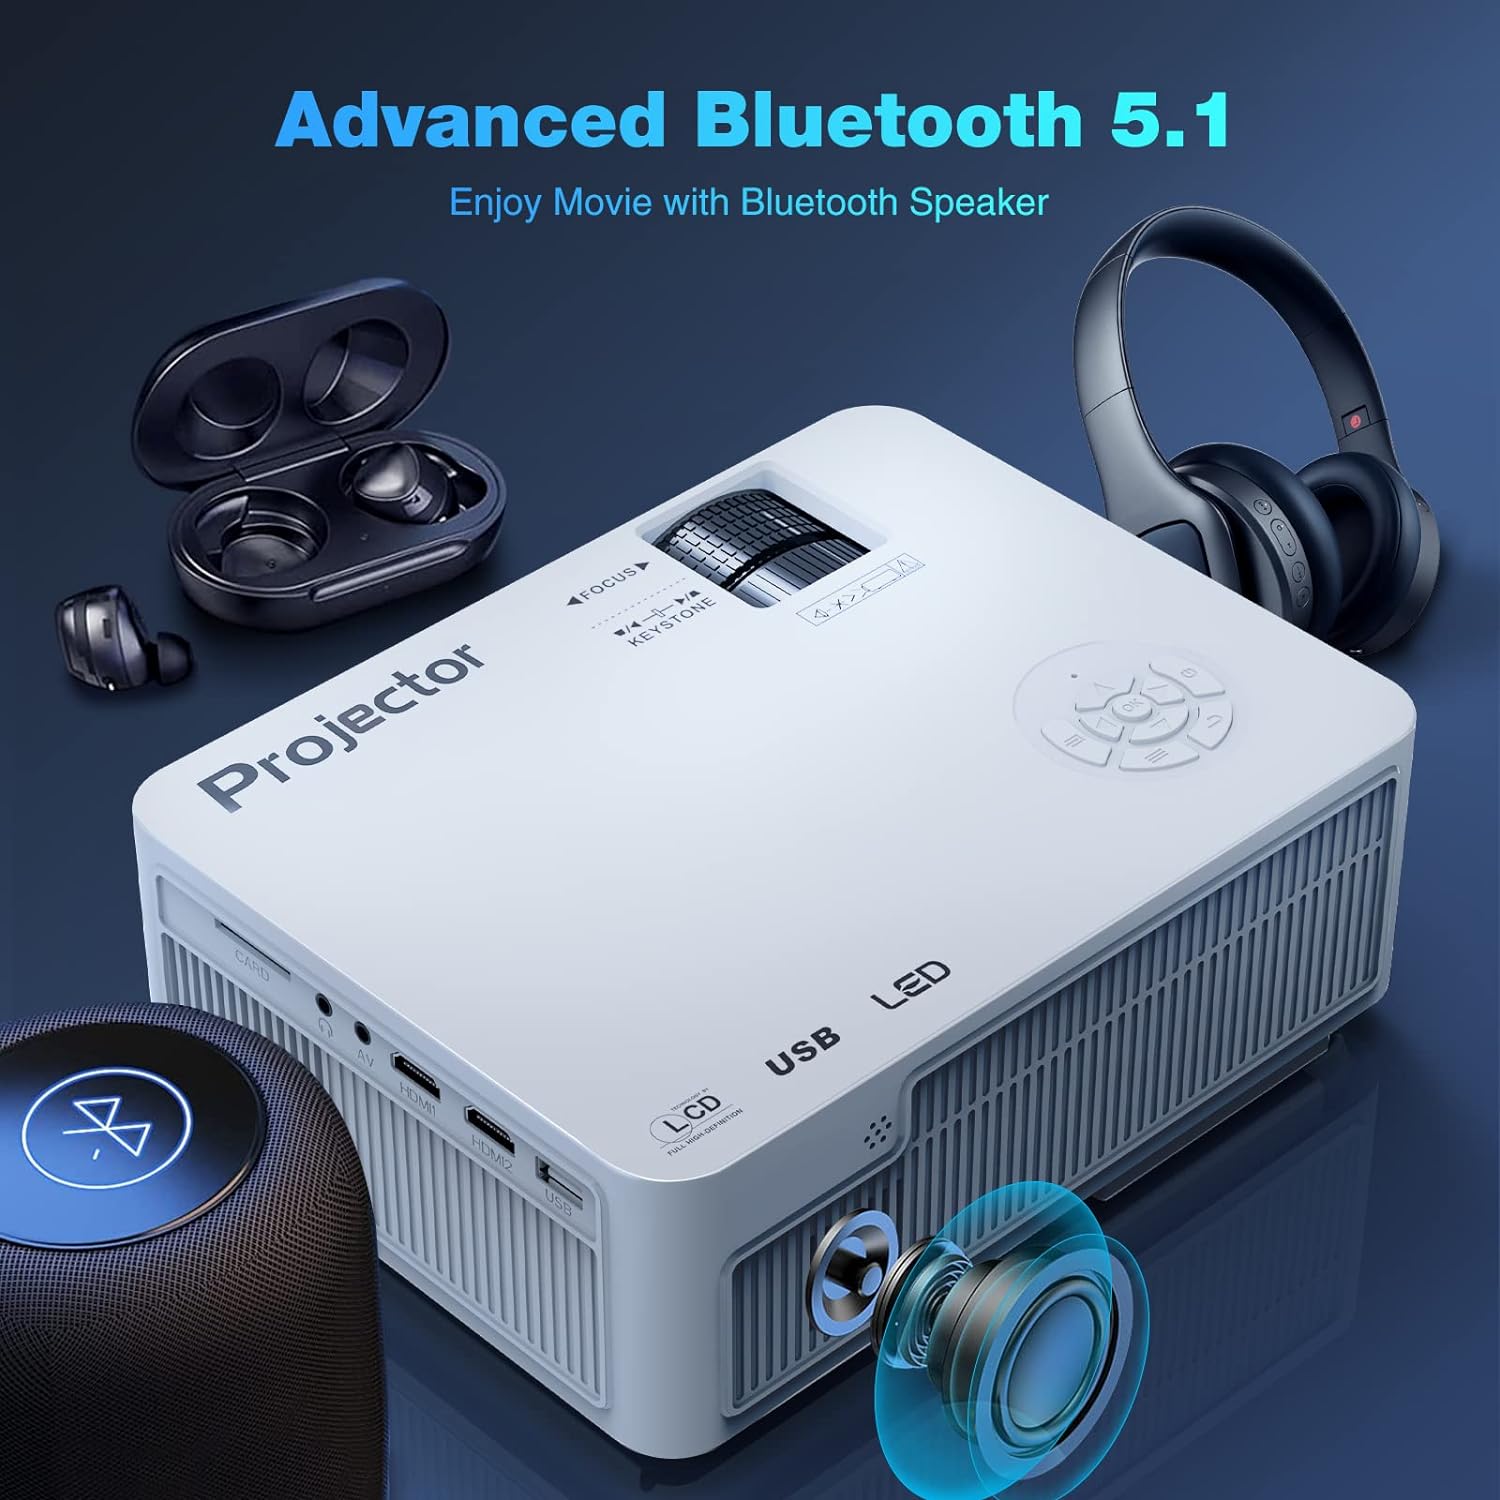 Proyector Bluetooth Native 1080P 5G WiFi con trípode proyector domésti -  VIRTUAL MUEBLES